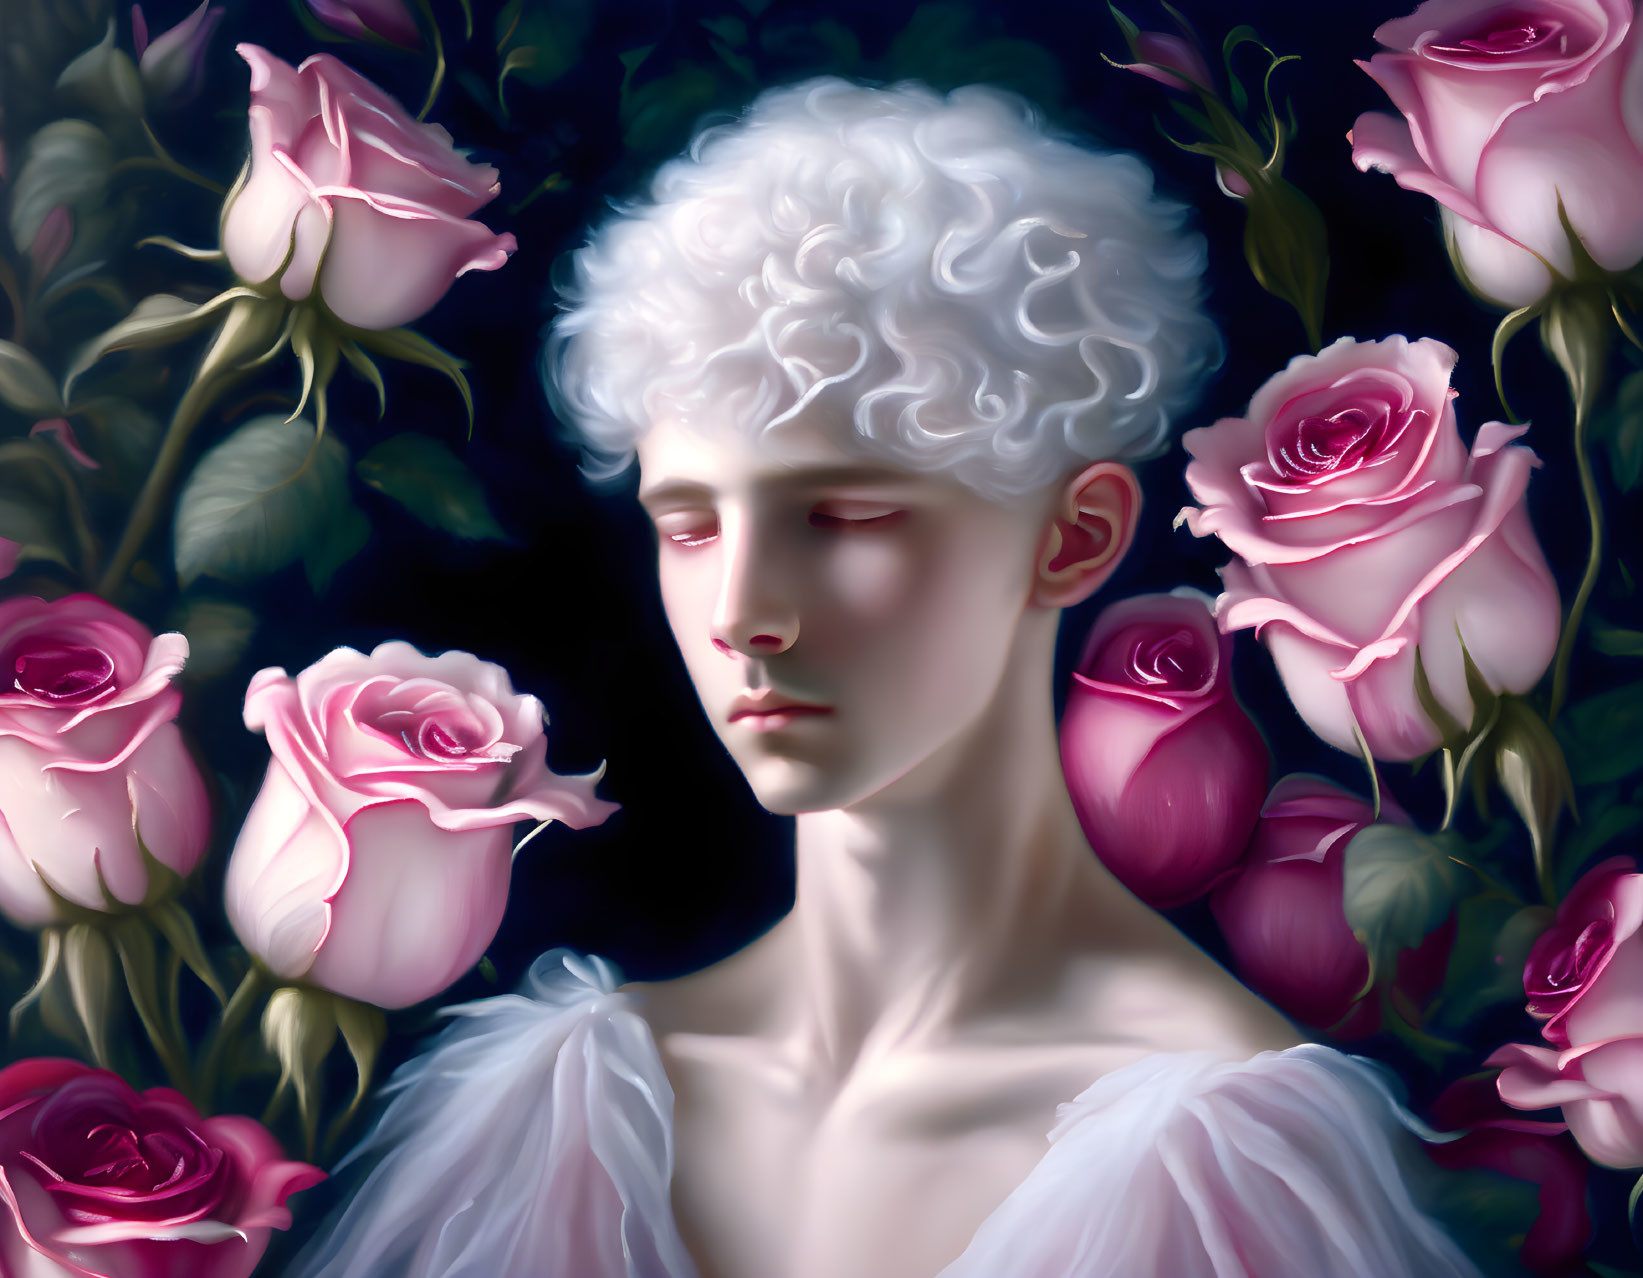 Rose garden angel